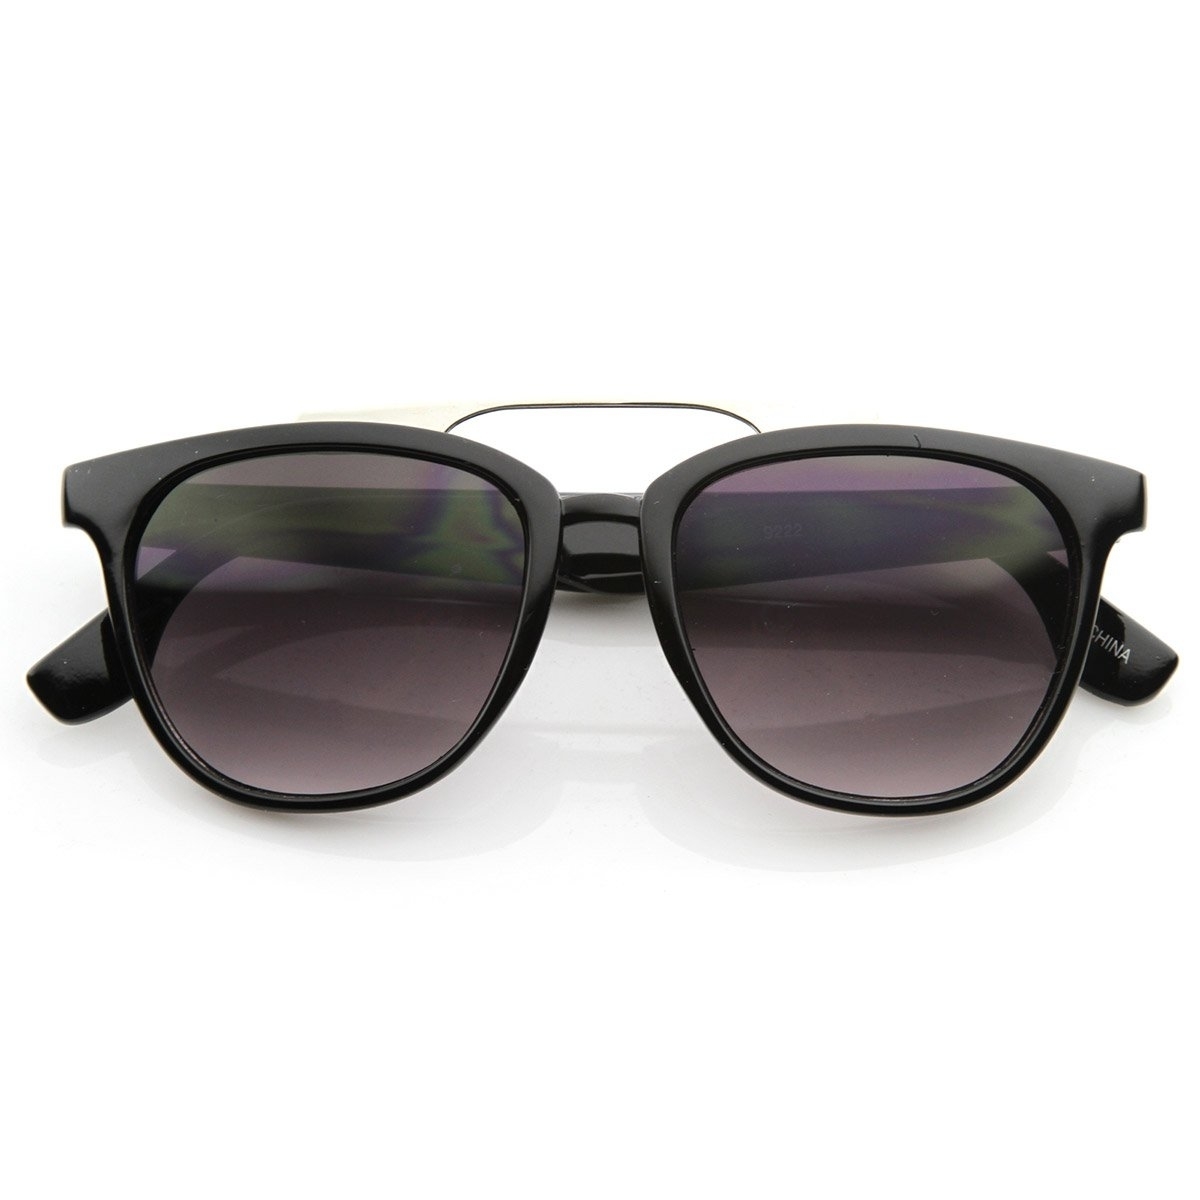 Vintage Inspired Fashion Horn Rimmed Horn Rimmed Sunglasses With Metal Crossbar - Black Smoke-Lens